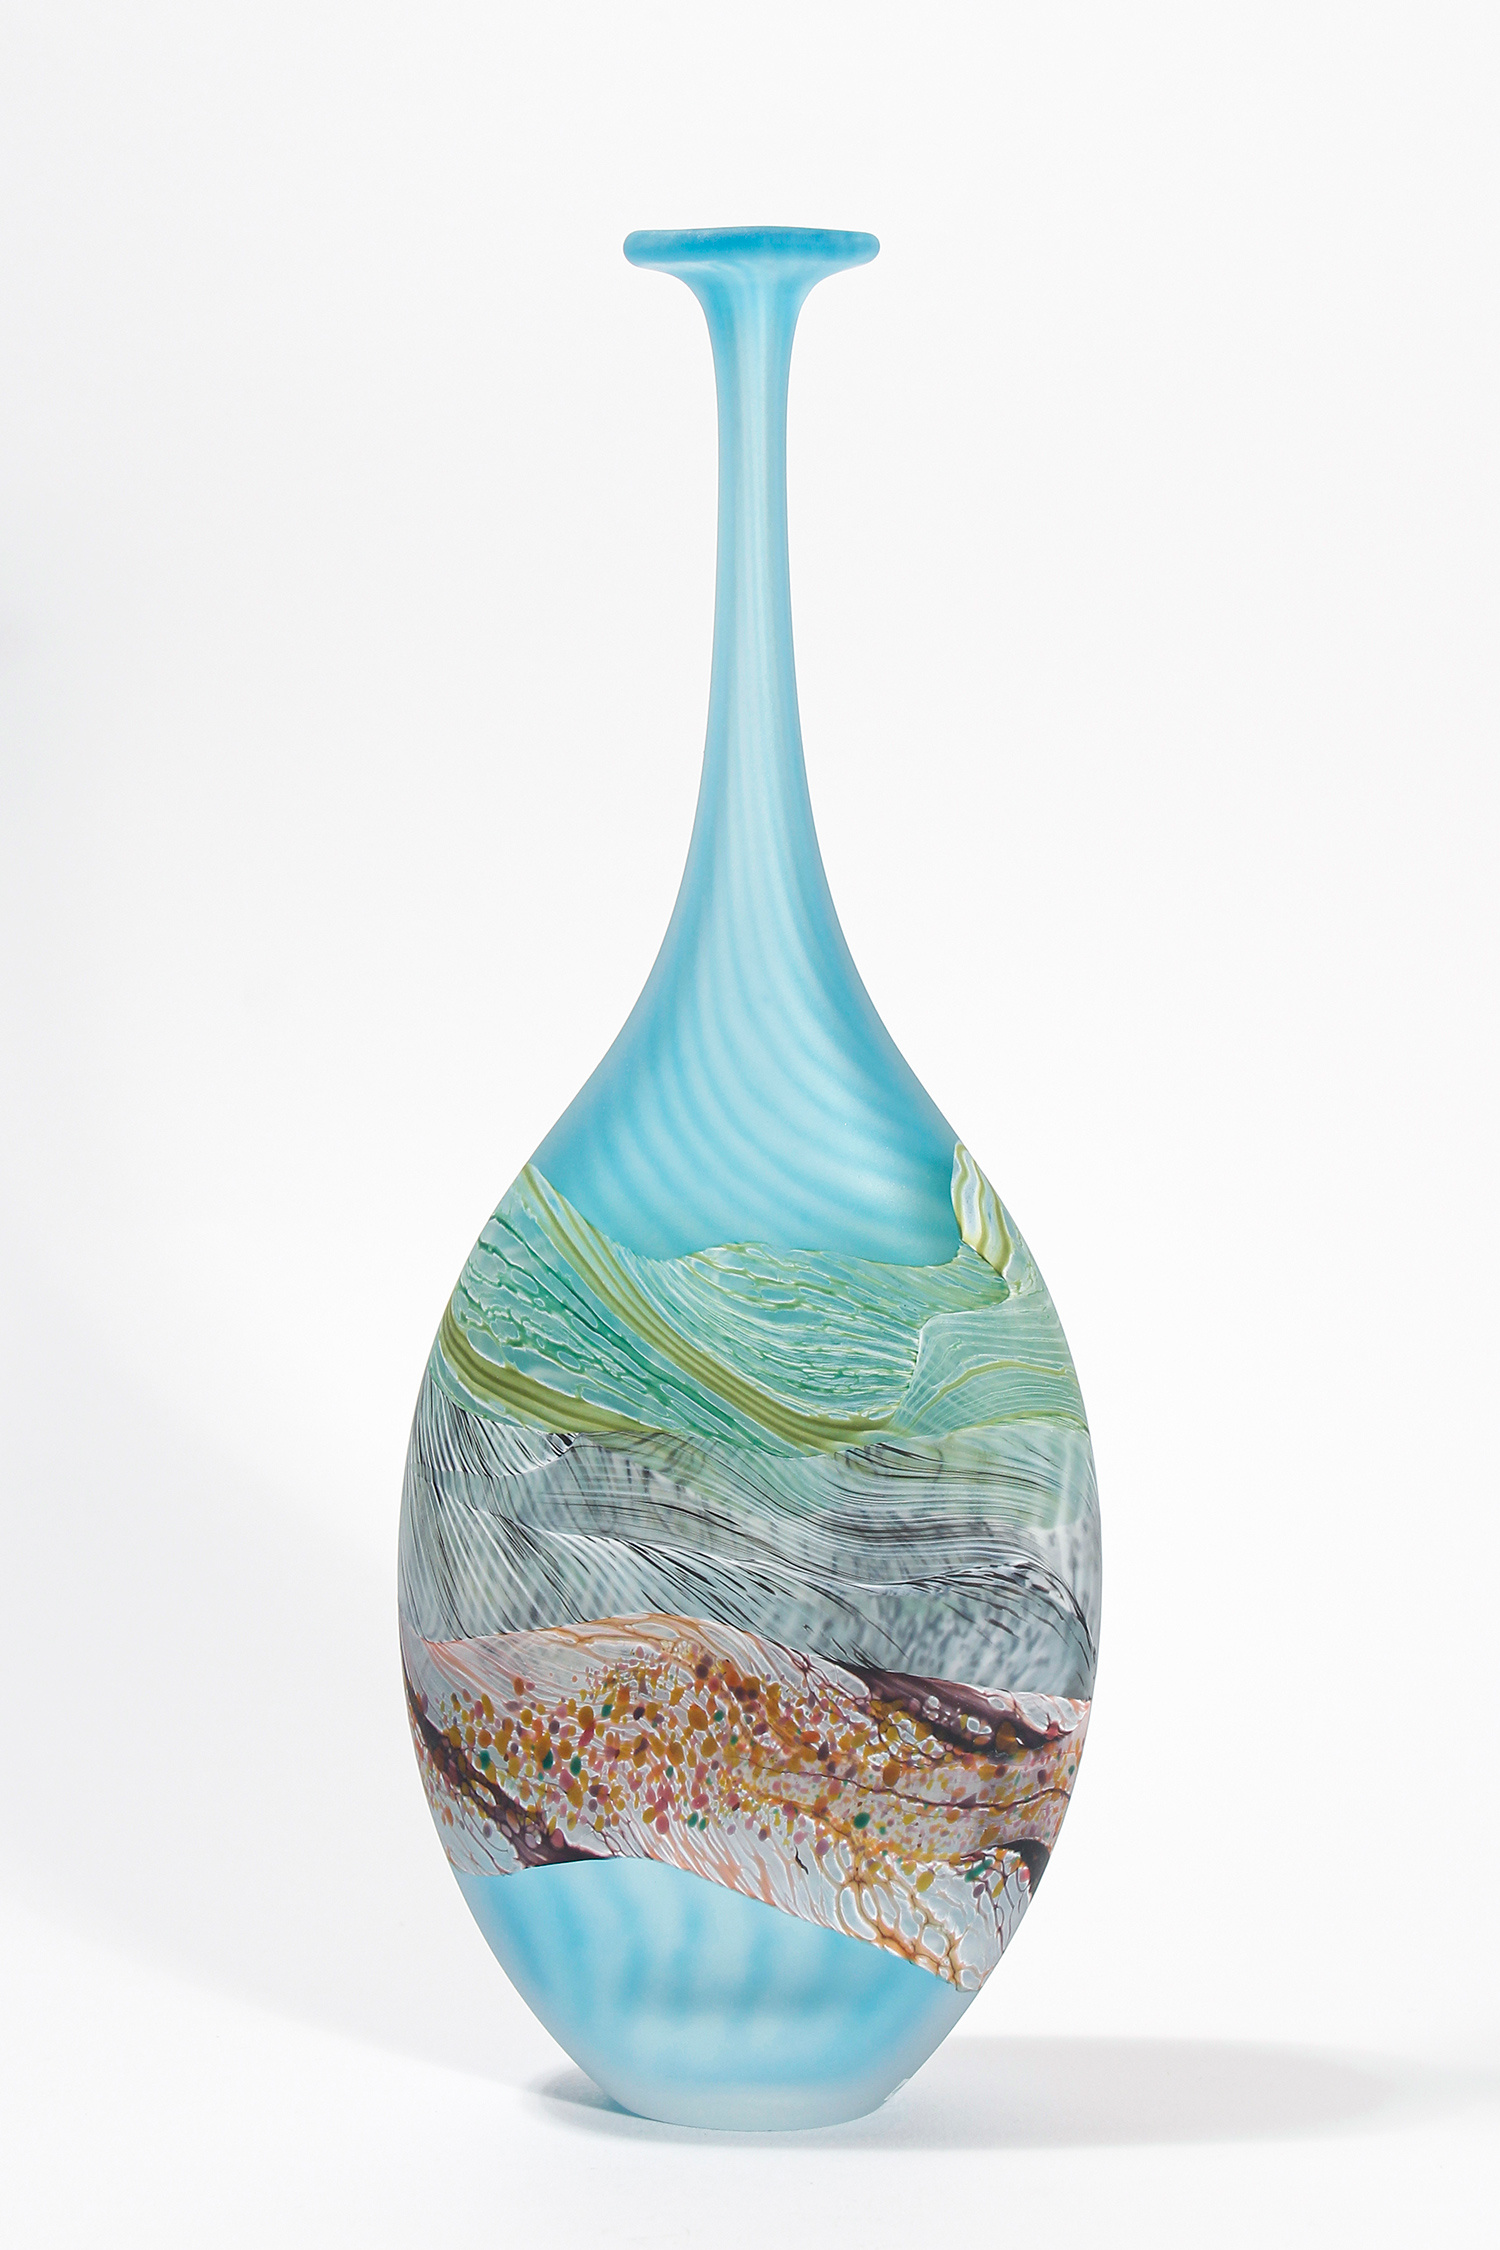 Flint Flattened Vase, small by Thomas Petit